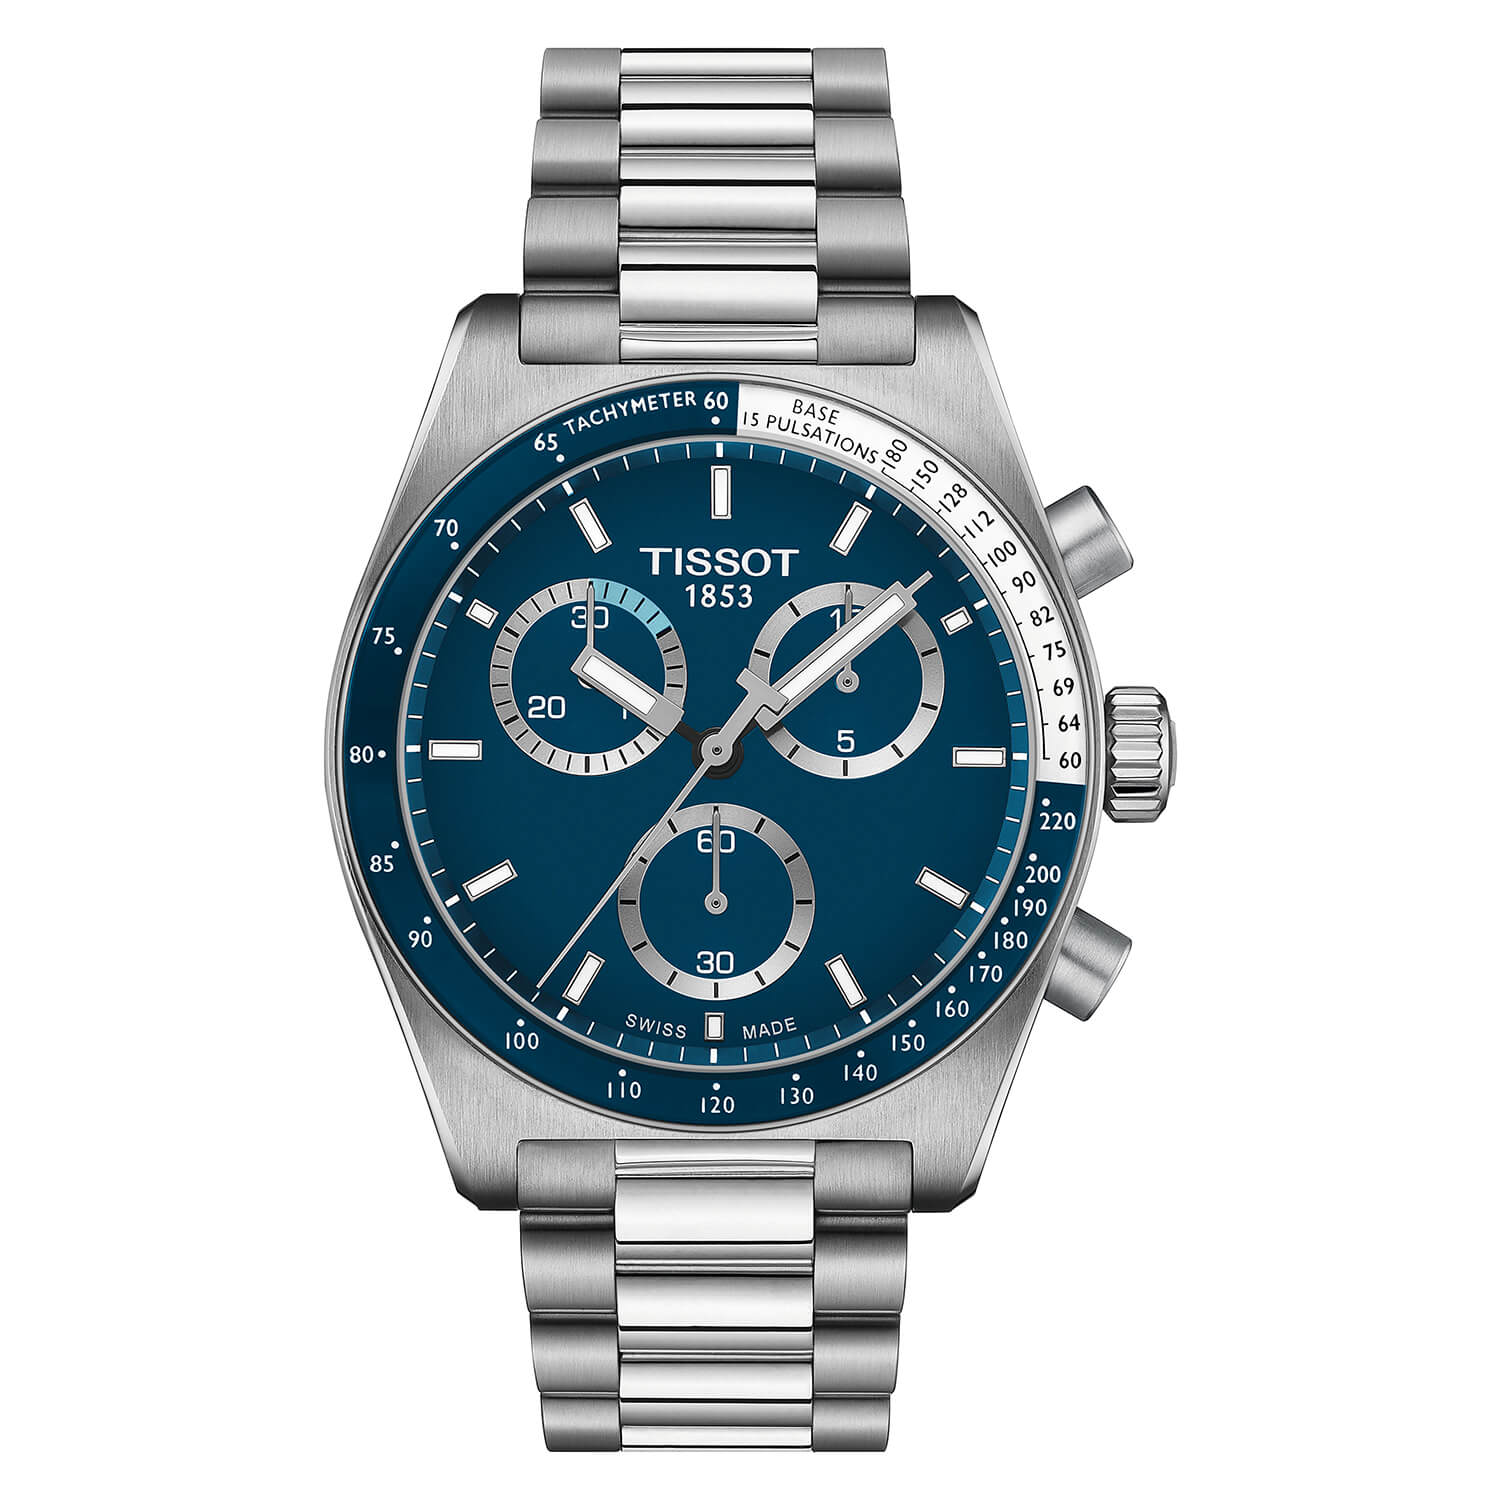 Photos - Wrist Watch TISSOT PR516 Chronograph 40mm Blue Dial Steel Bracelet Watch 